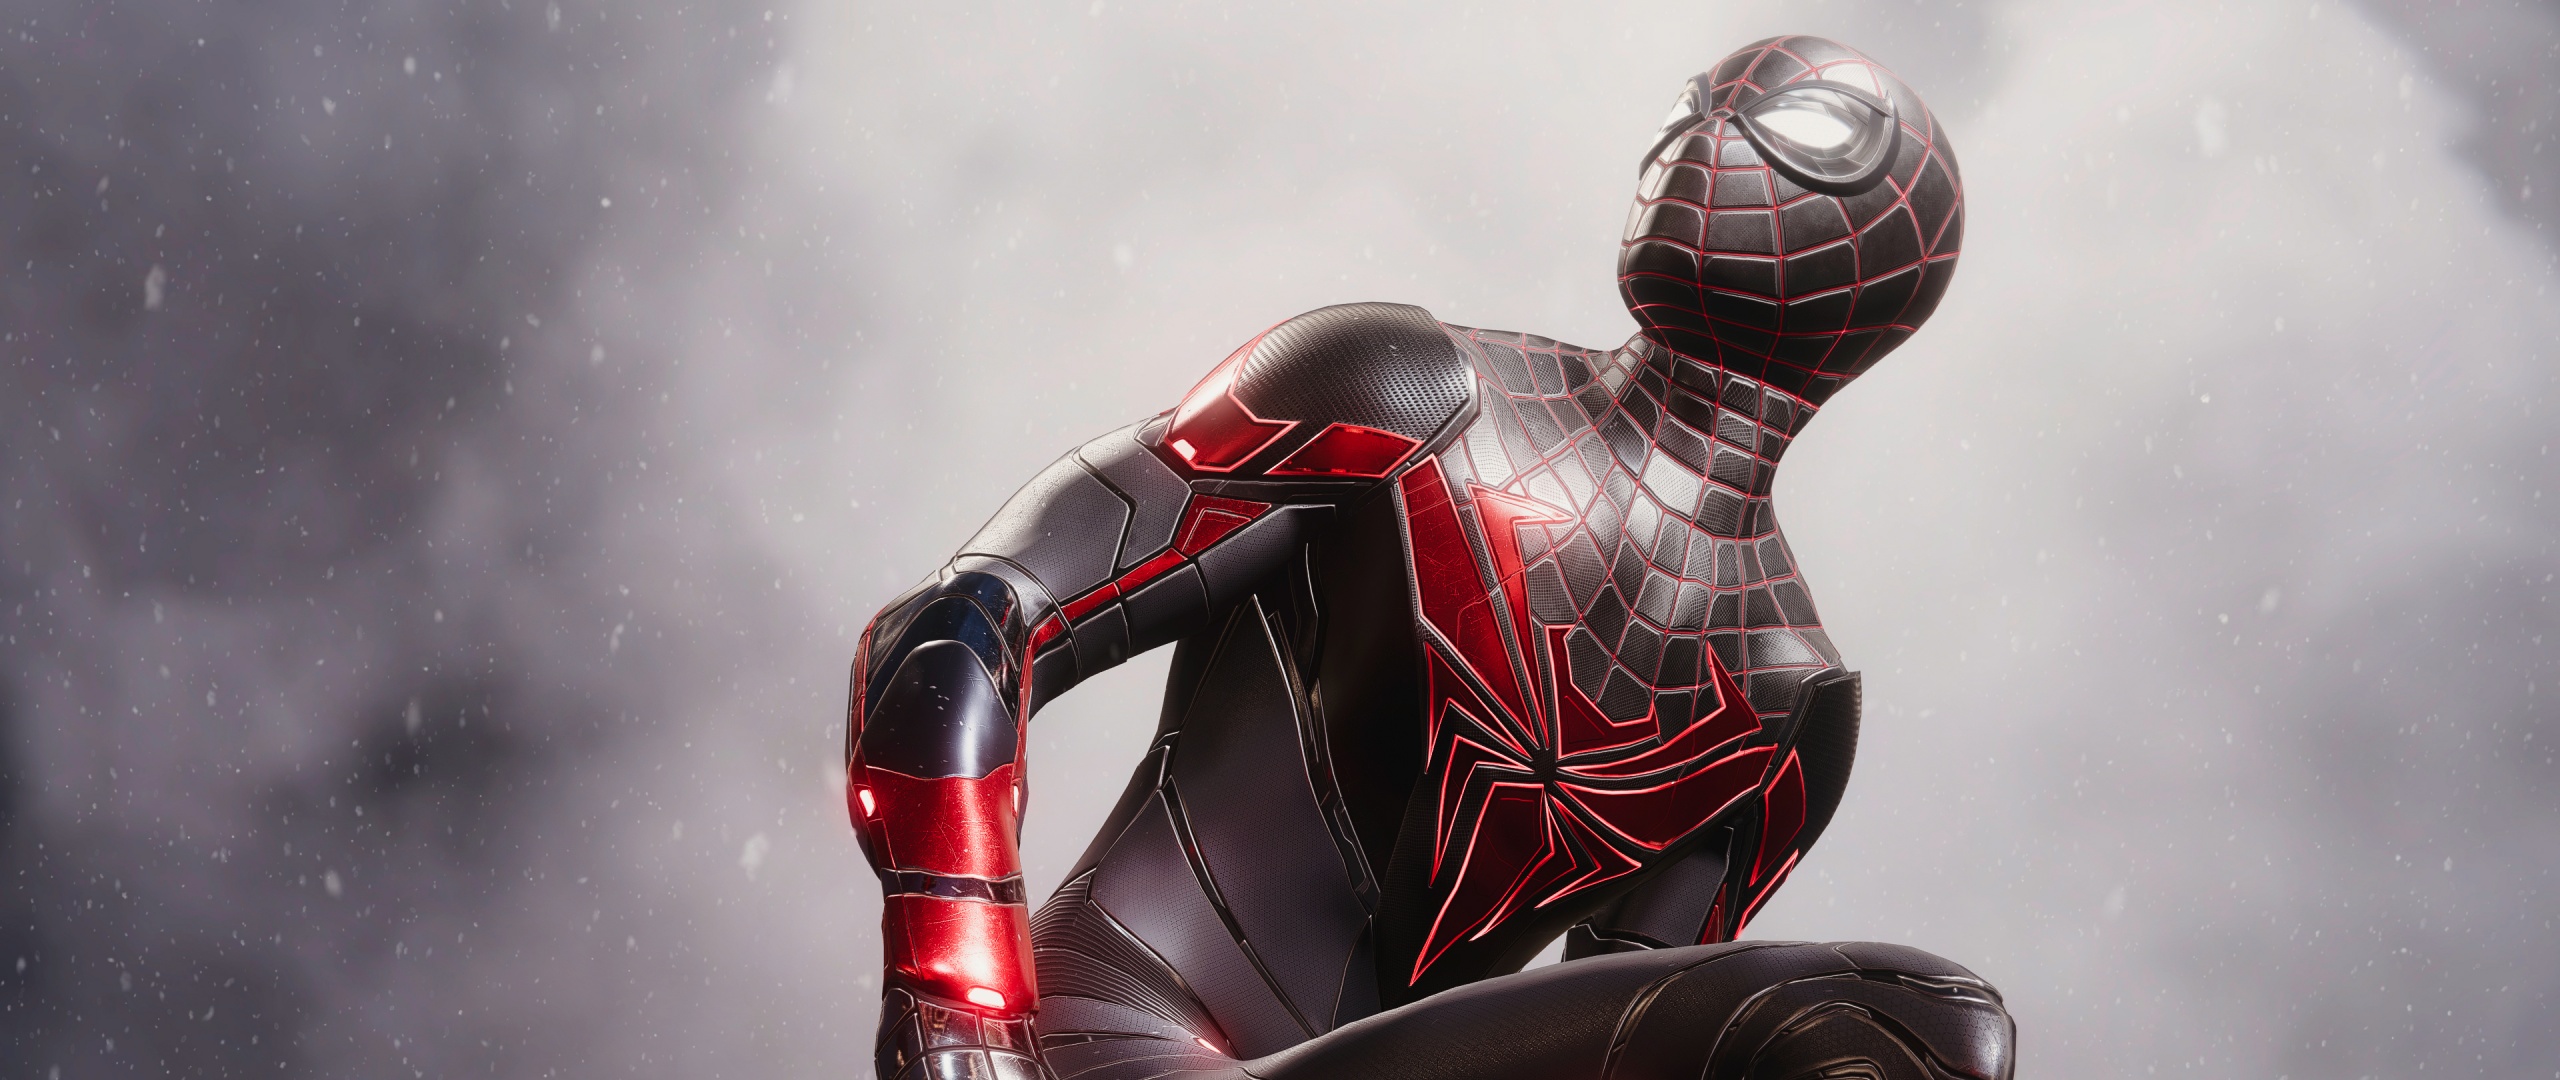 Spider-Man Miles Morales PS5 Game Web Shoot 4K Wallpaper #5.2200